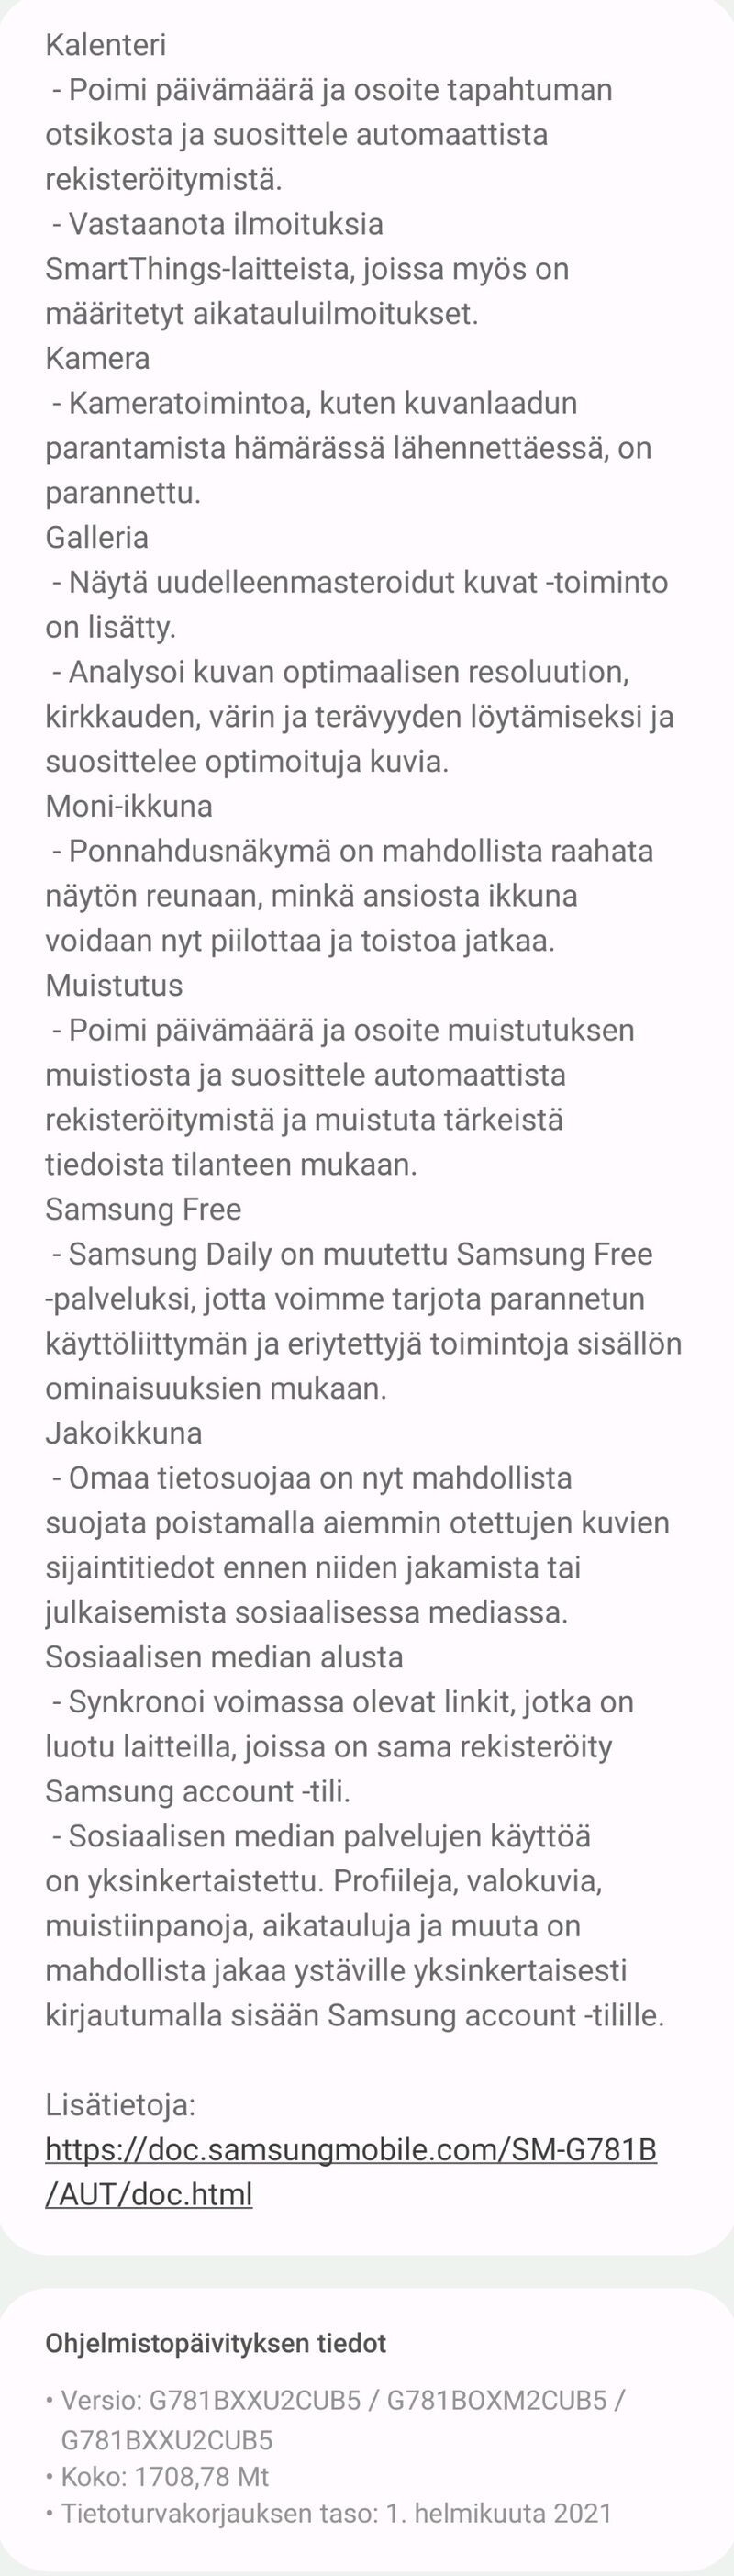 One UI 3.1 uudistukset Galaxy S20 FE puhelimessa